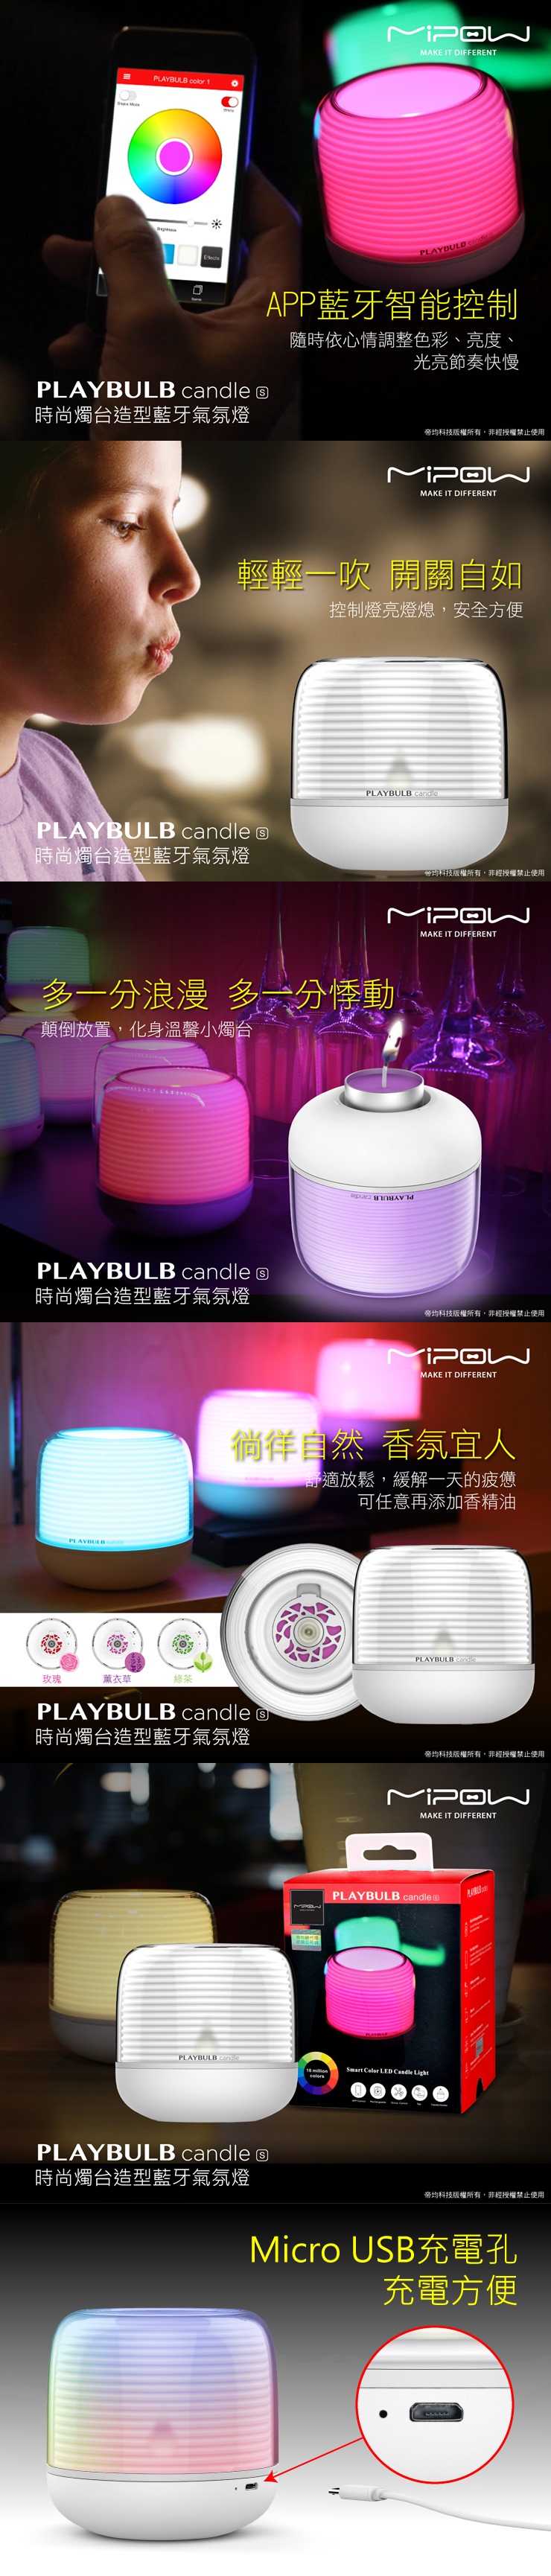 MiPow PLAYBULB Candle S 時尚燭台造型藍牙氣氛燈